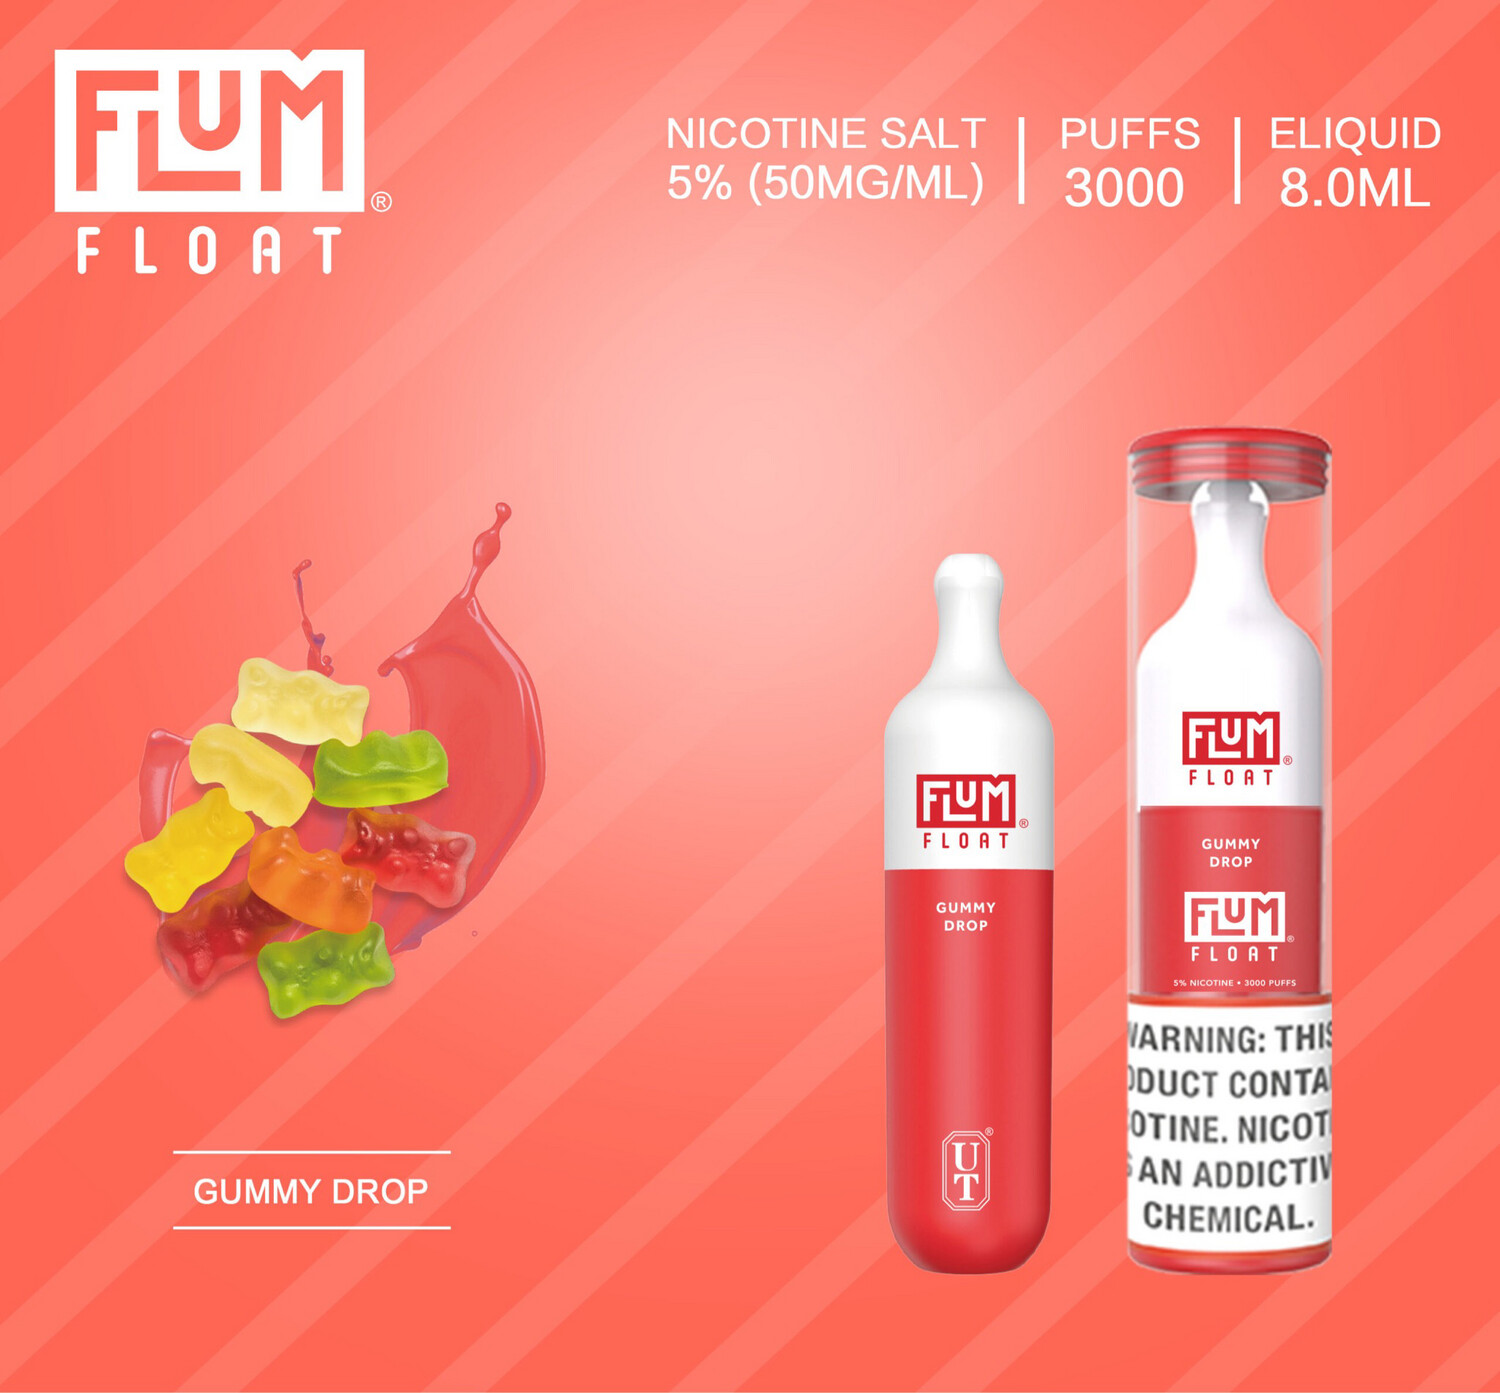 Flum Float 5% Gummy Drop